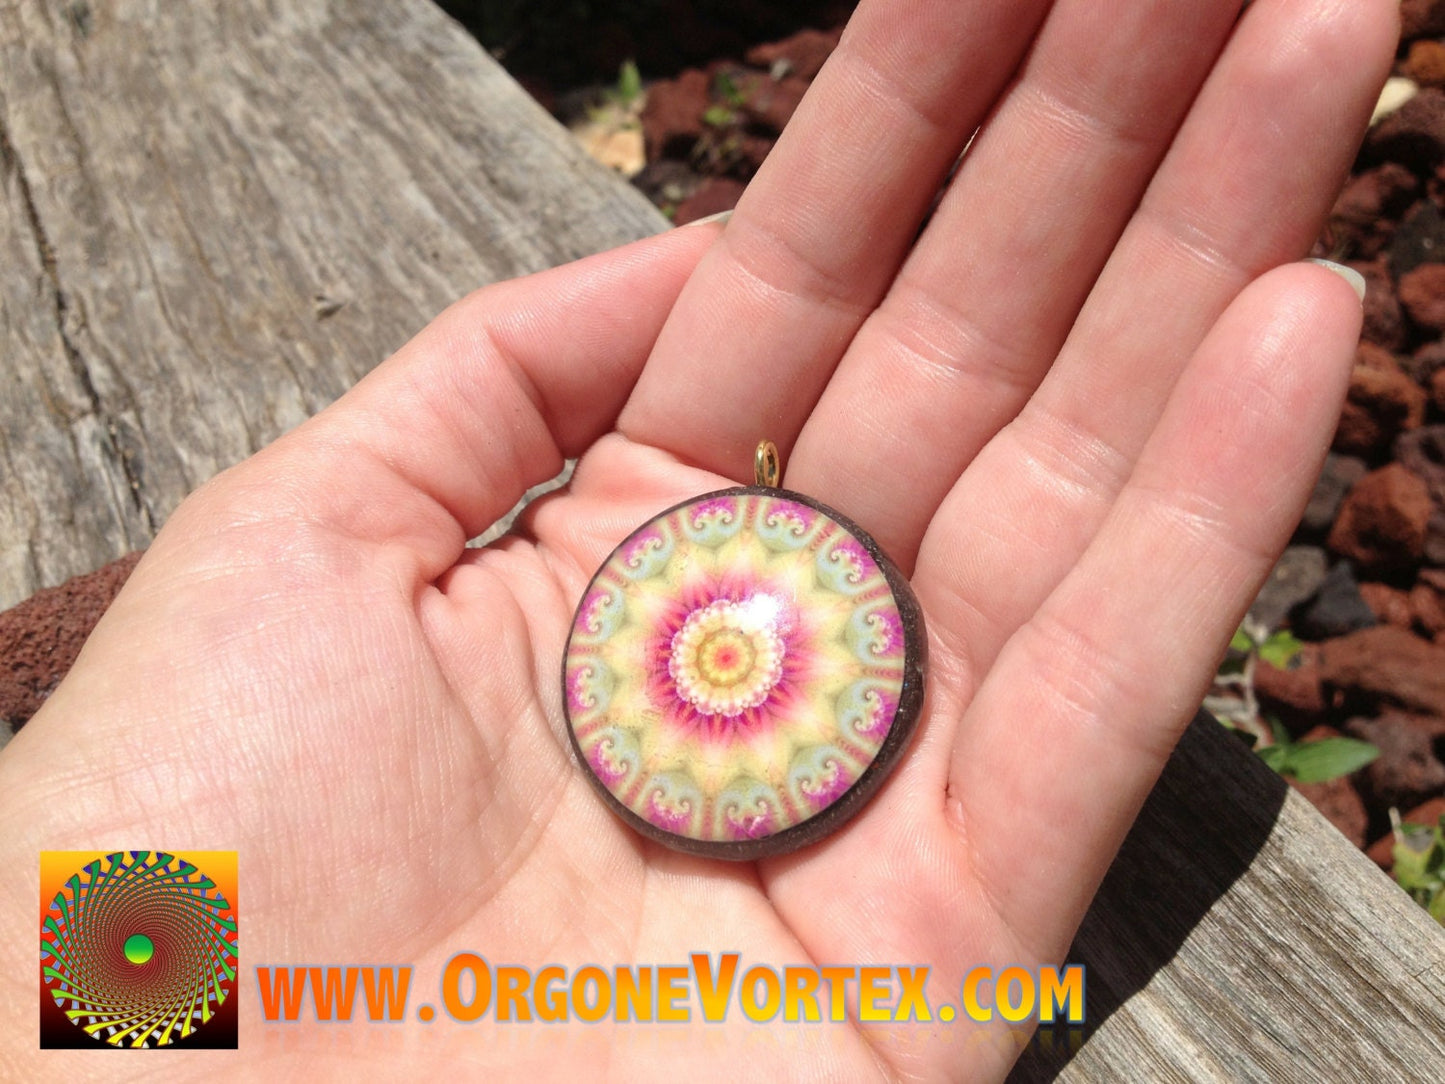 Orgone Flower Fractal Mandala Pendant feat. - EMF Blocker - Chakra Balancing - FREE Necklace - Hand Made